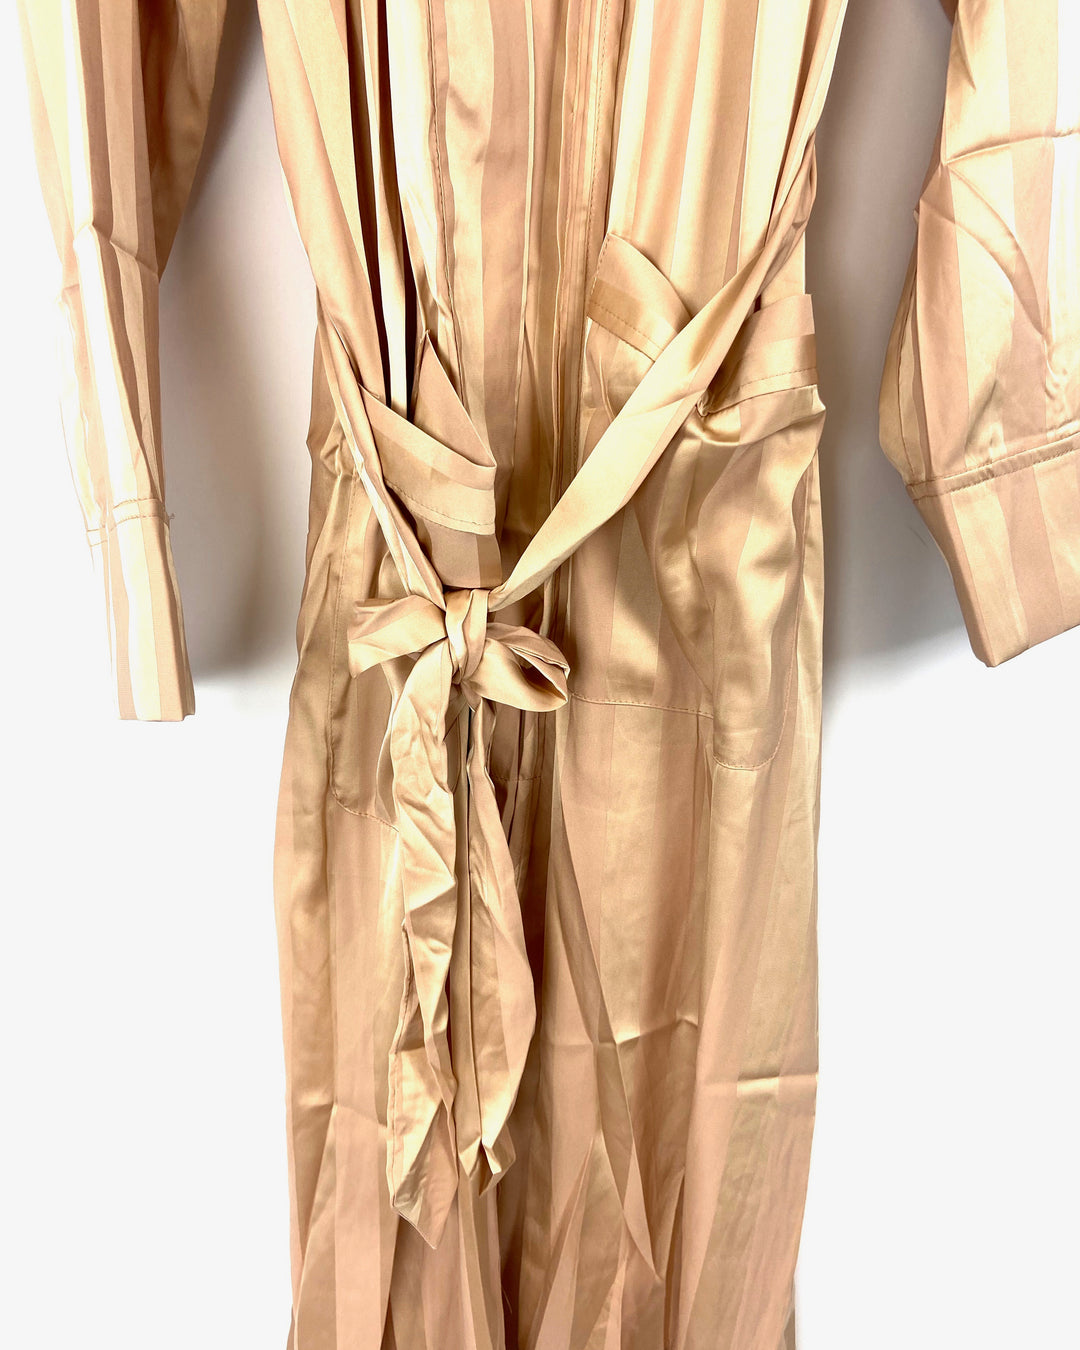 Gold Striped Robe - Small, Medium, Large